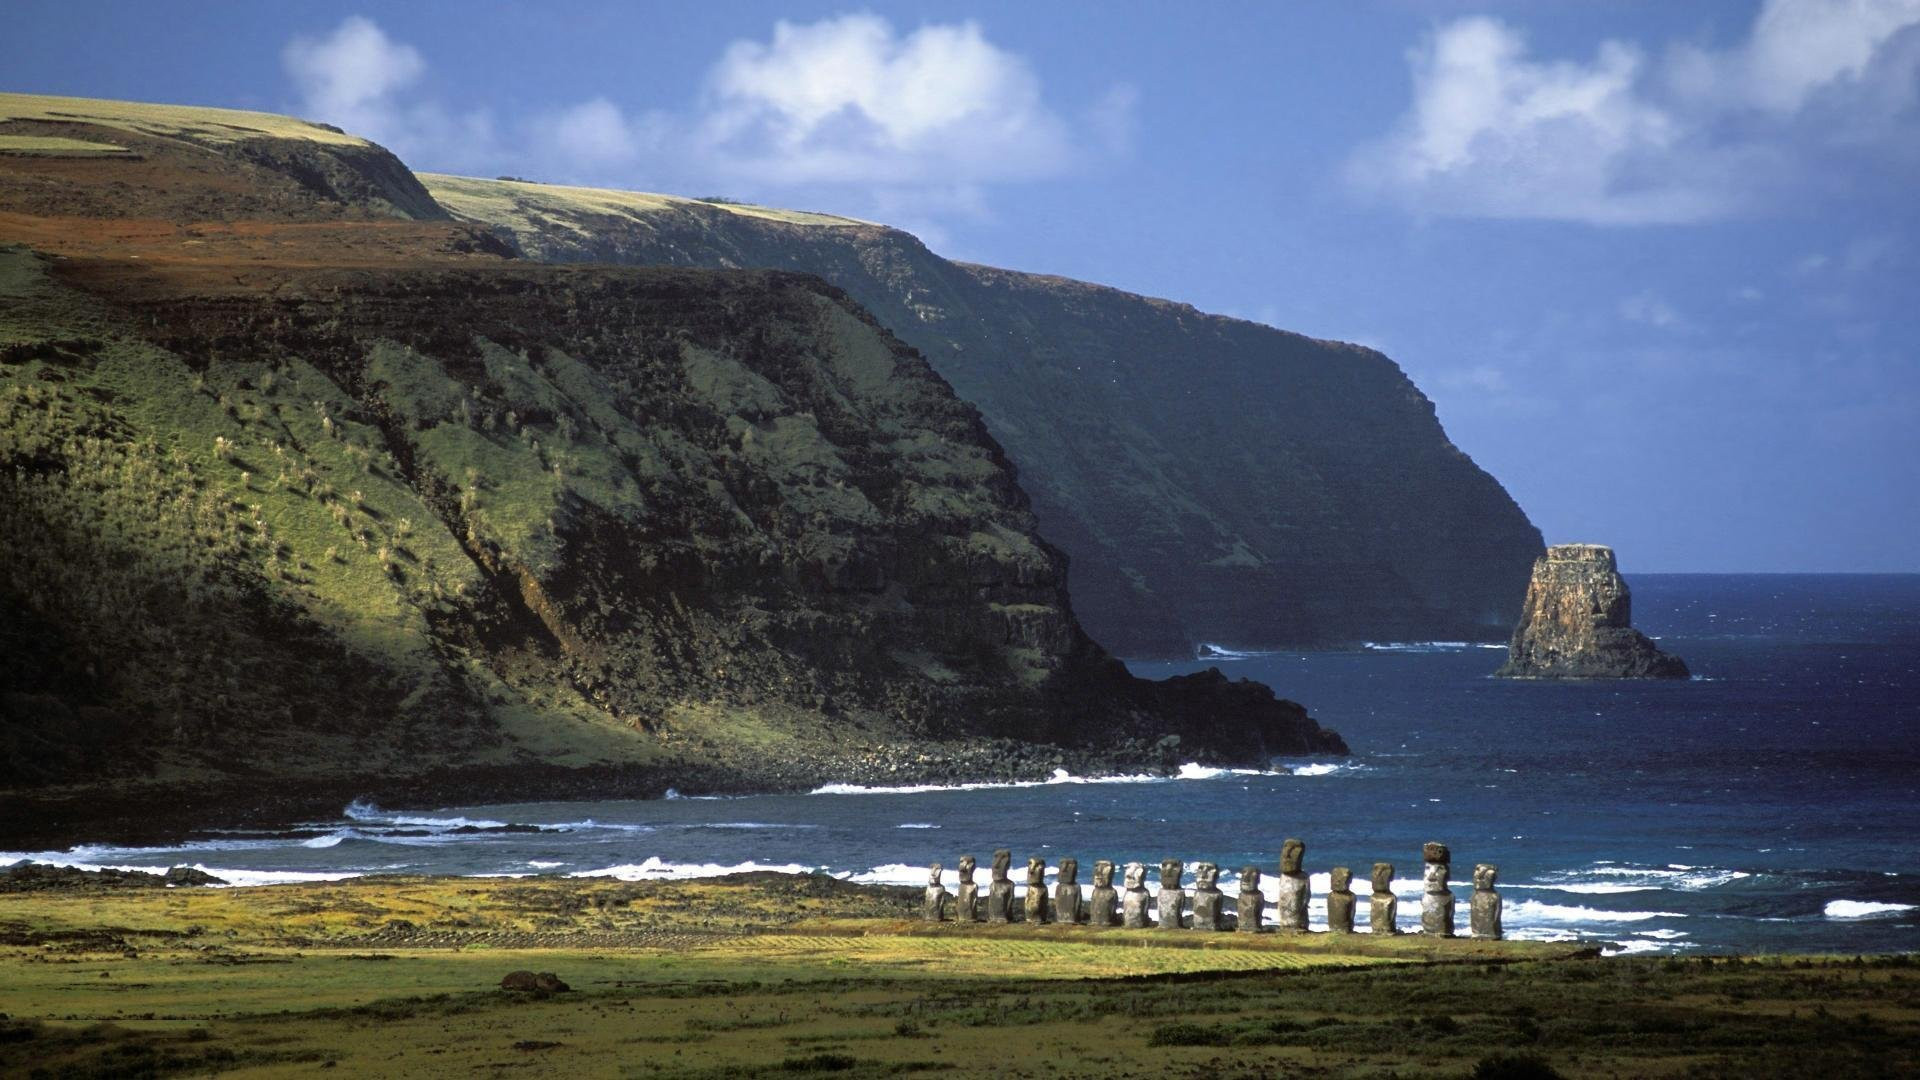 Chile: Easter Island, home to the famous Moai statues, Ahu Tongariki. 1920x1080 Full HD Wallpaper.